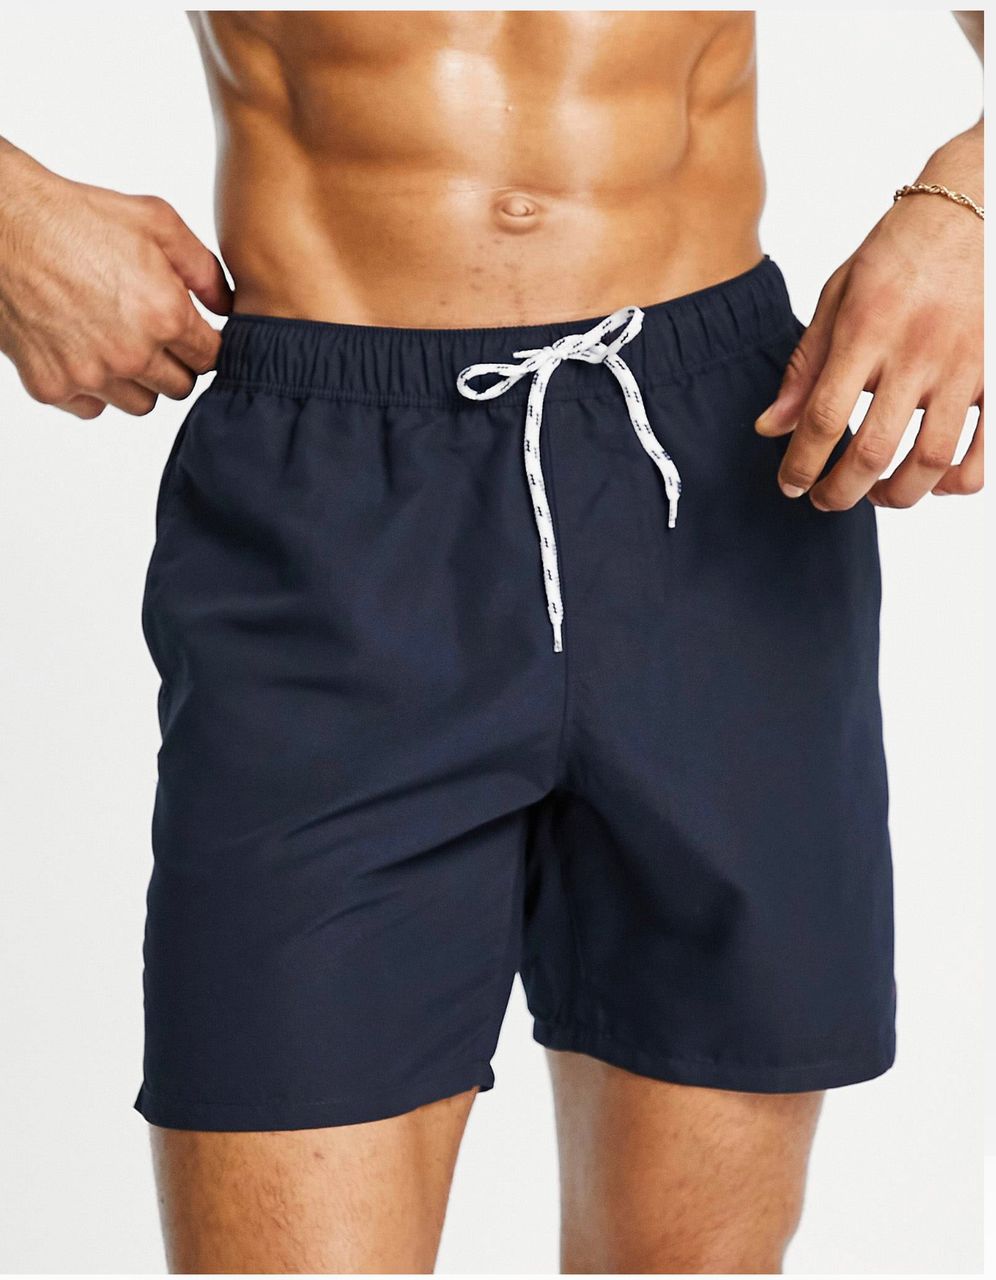 Swim shorts in navy mid length